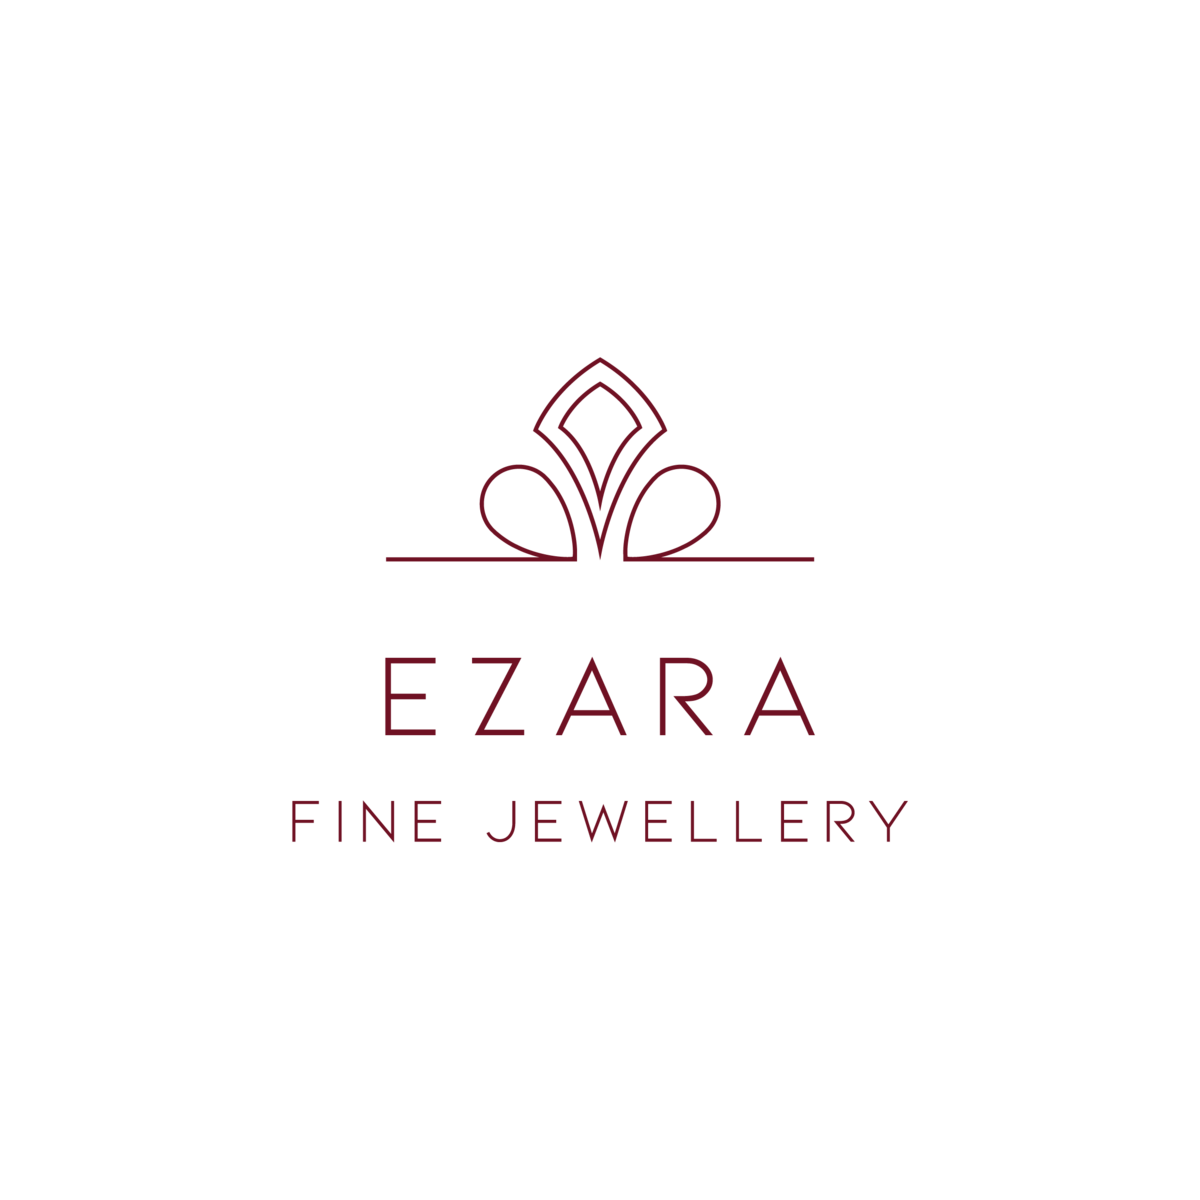 Ezara Fine Jewellery_Colour